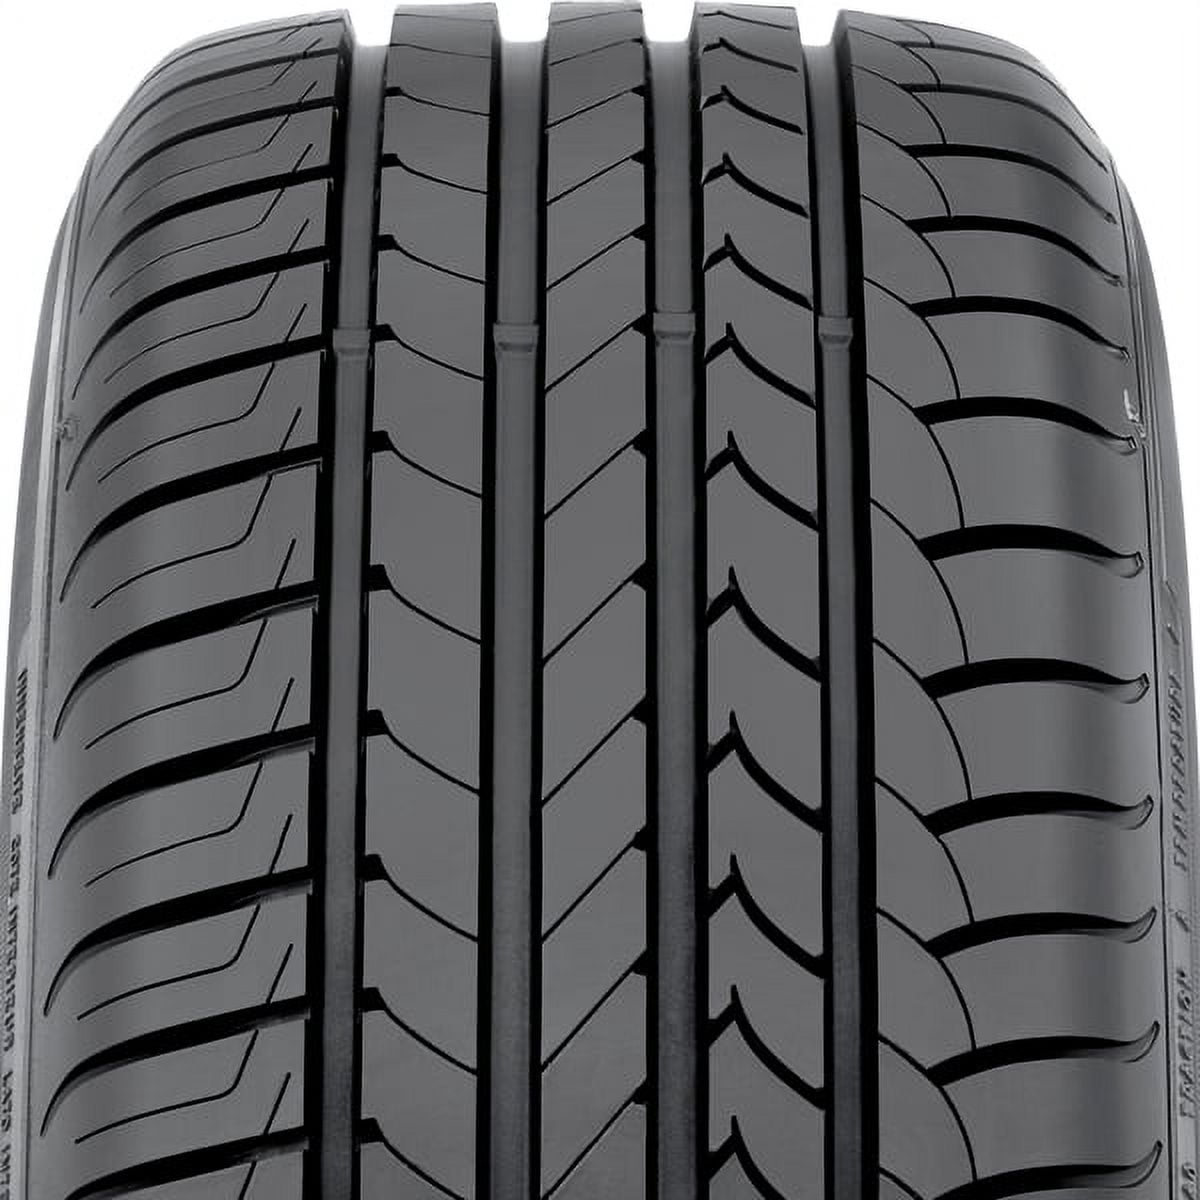 Flat Summer Goodyear Tire ROF Run Grip 255/40R18 Efficient Performance 95Y